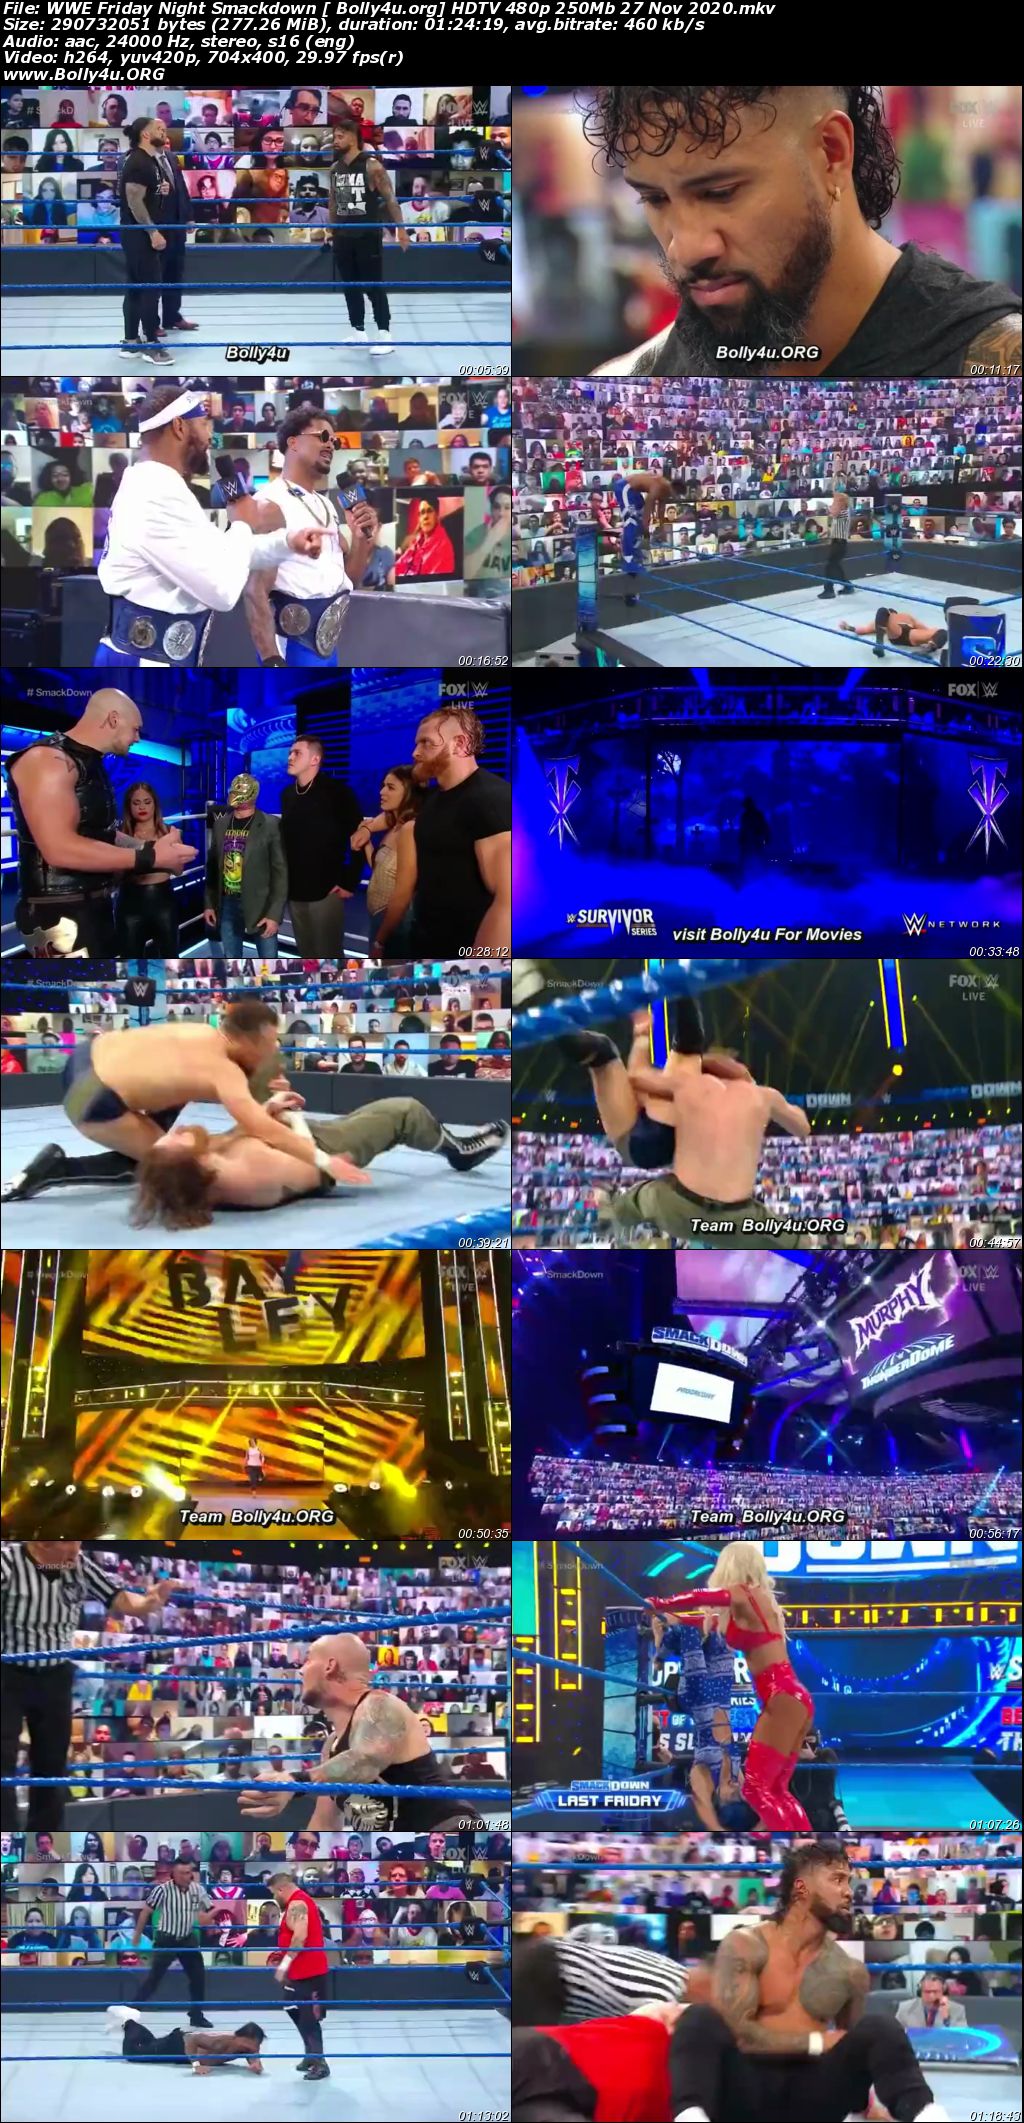 WWE Friday Night Smackdown HDTV 480p 250Mb 27 Nov 2020 Download